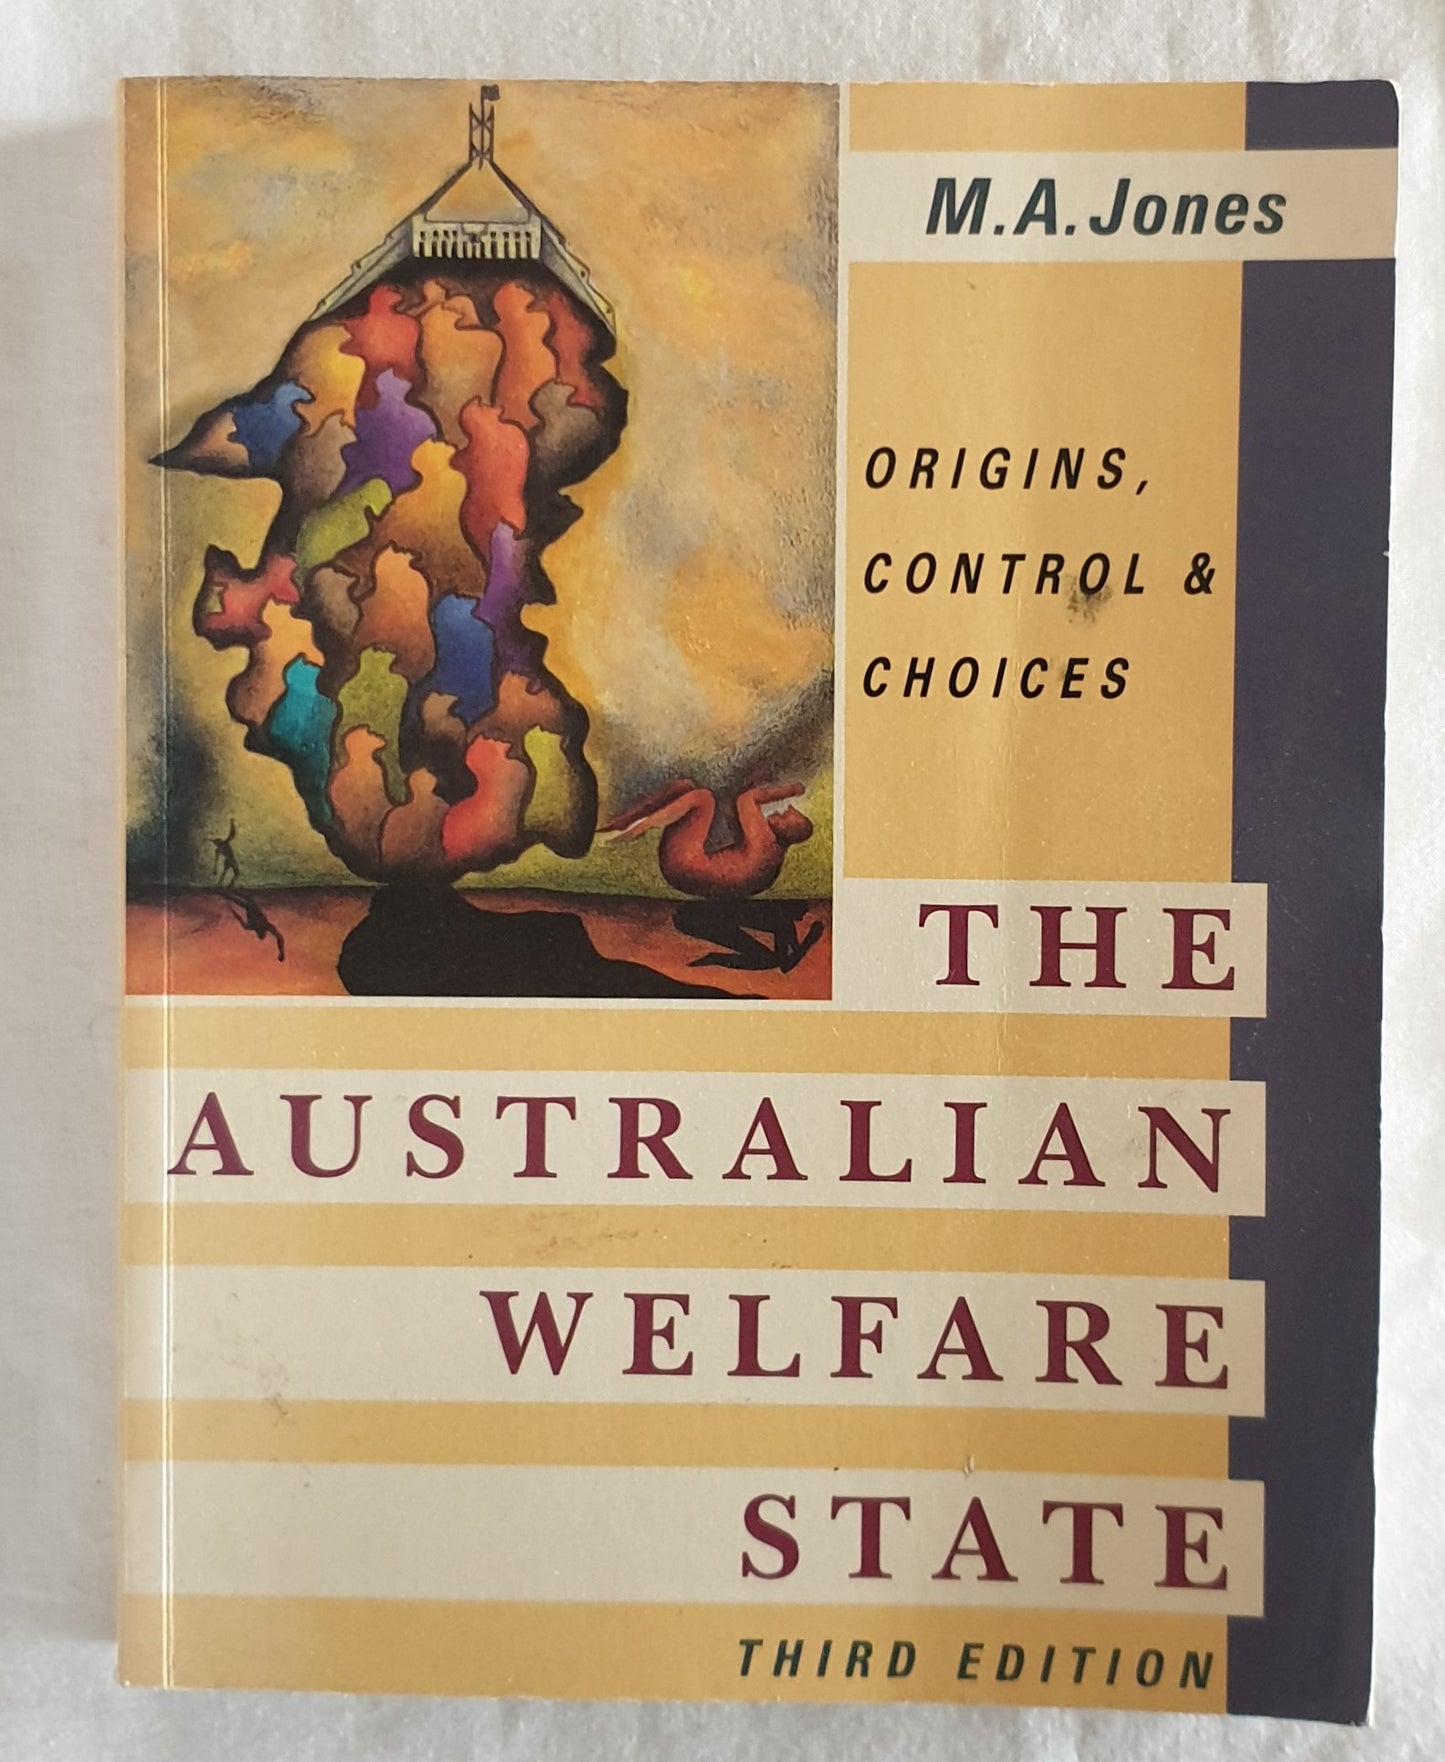 The Australian Welfare State by M. A. Jones